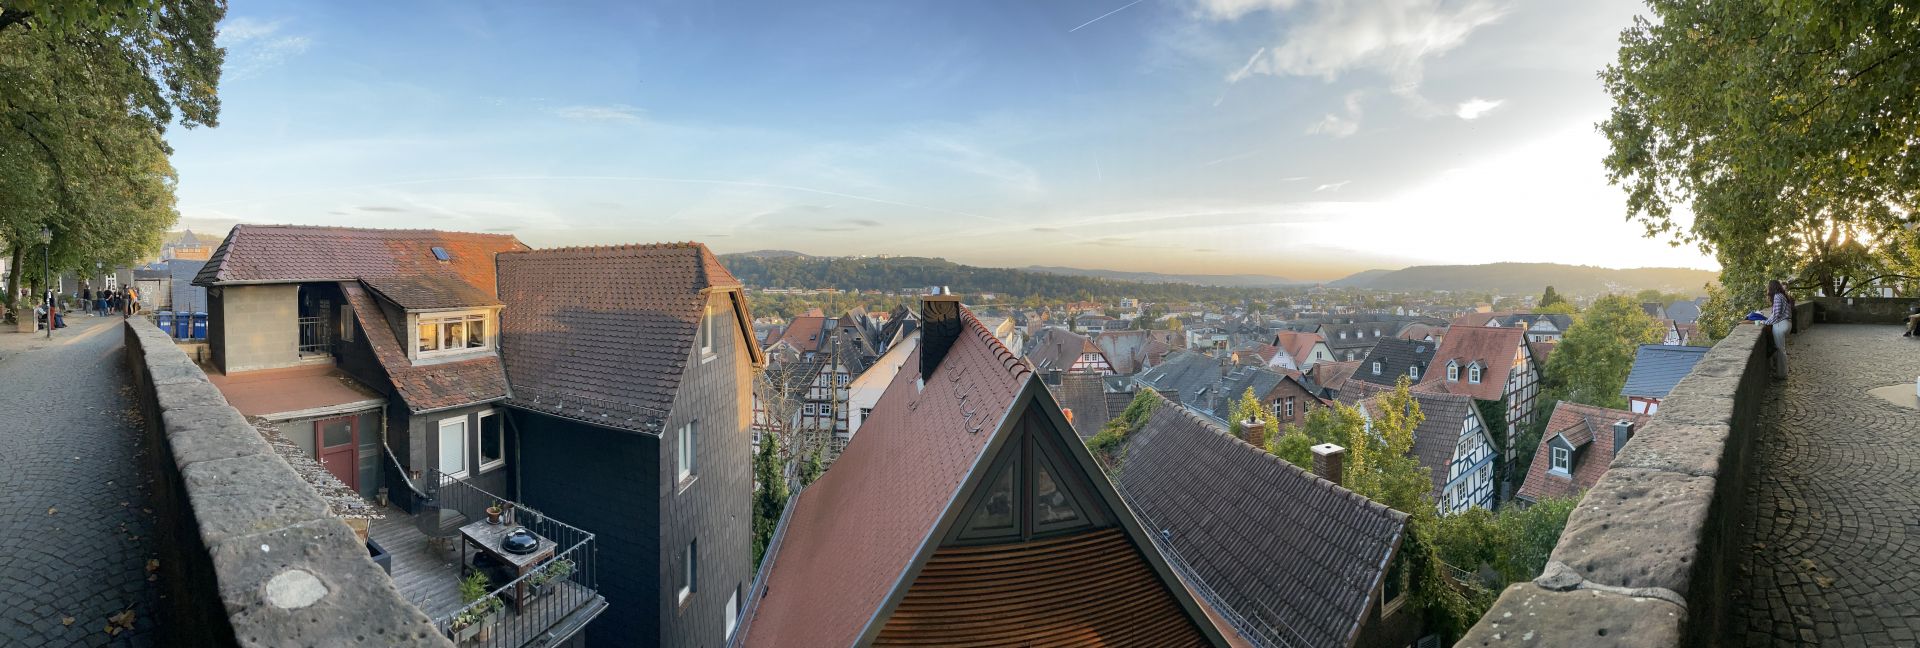 panorama shot Oberstadt Marburg/Lahn